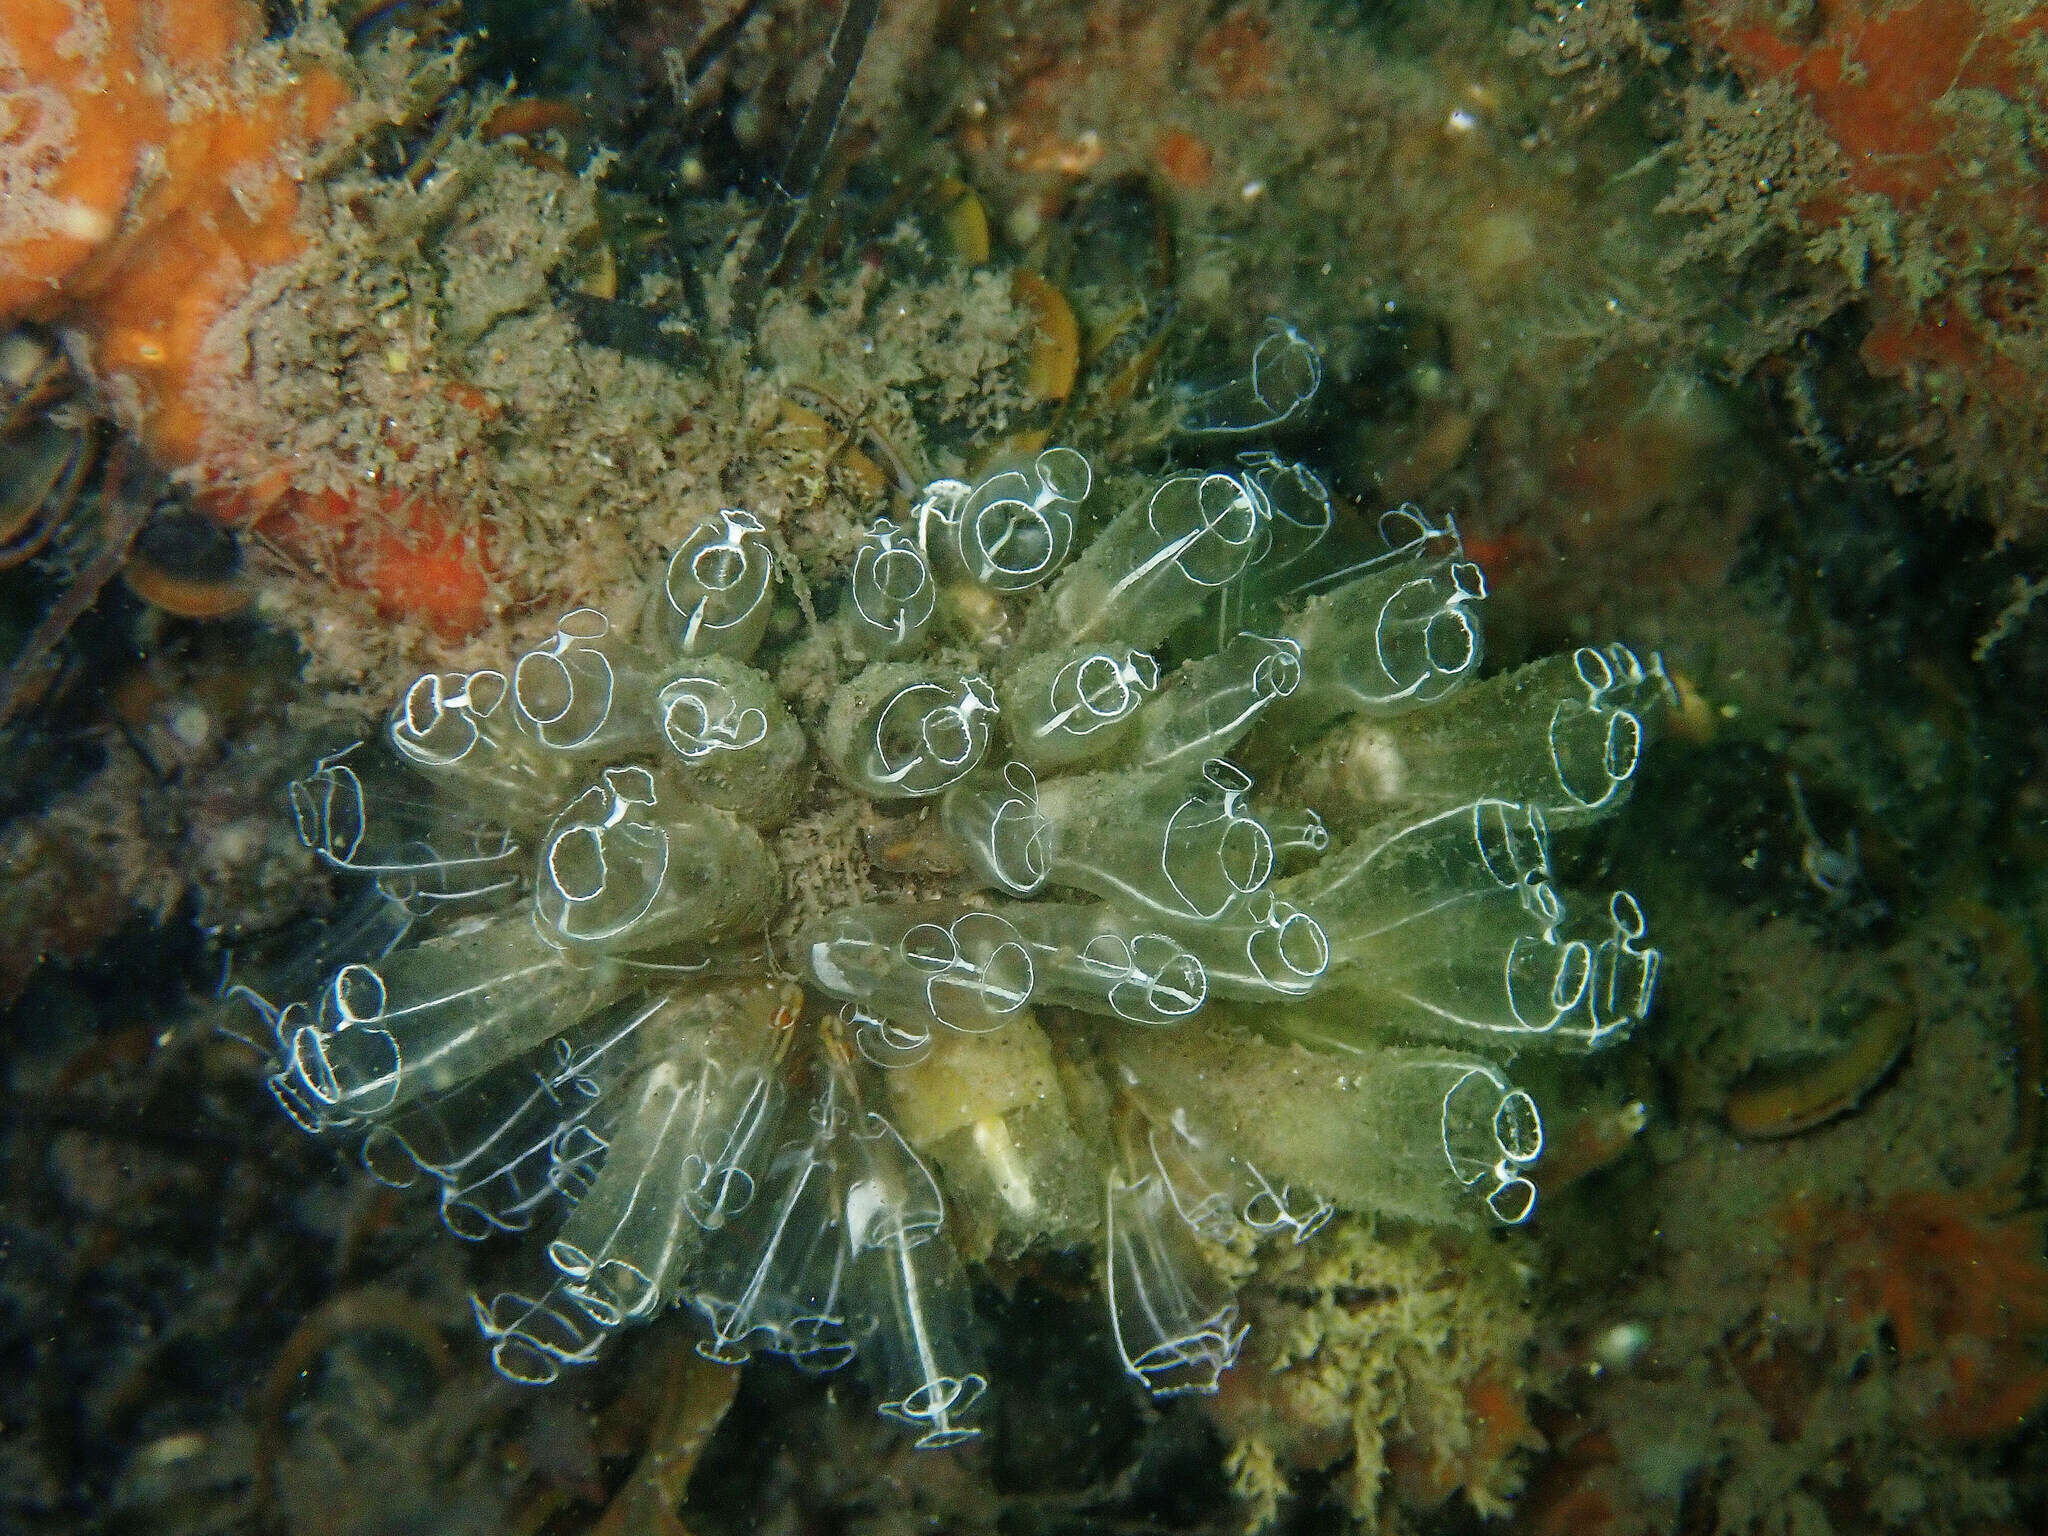 Image of Light-bulb sea squirt